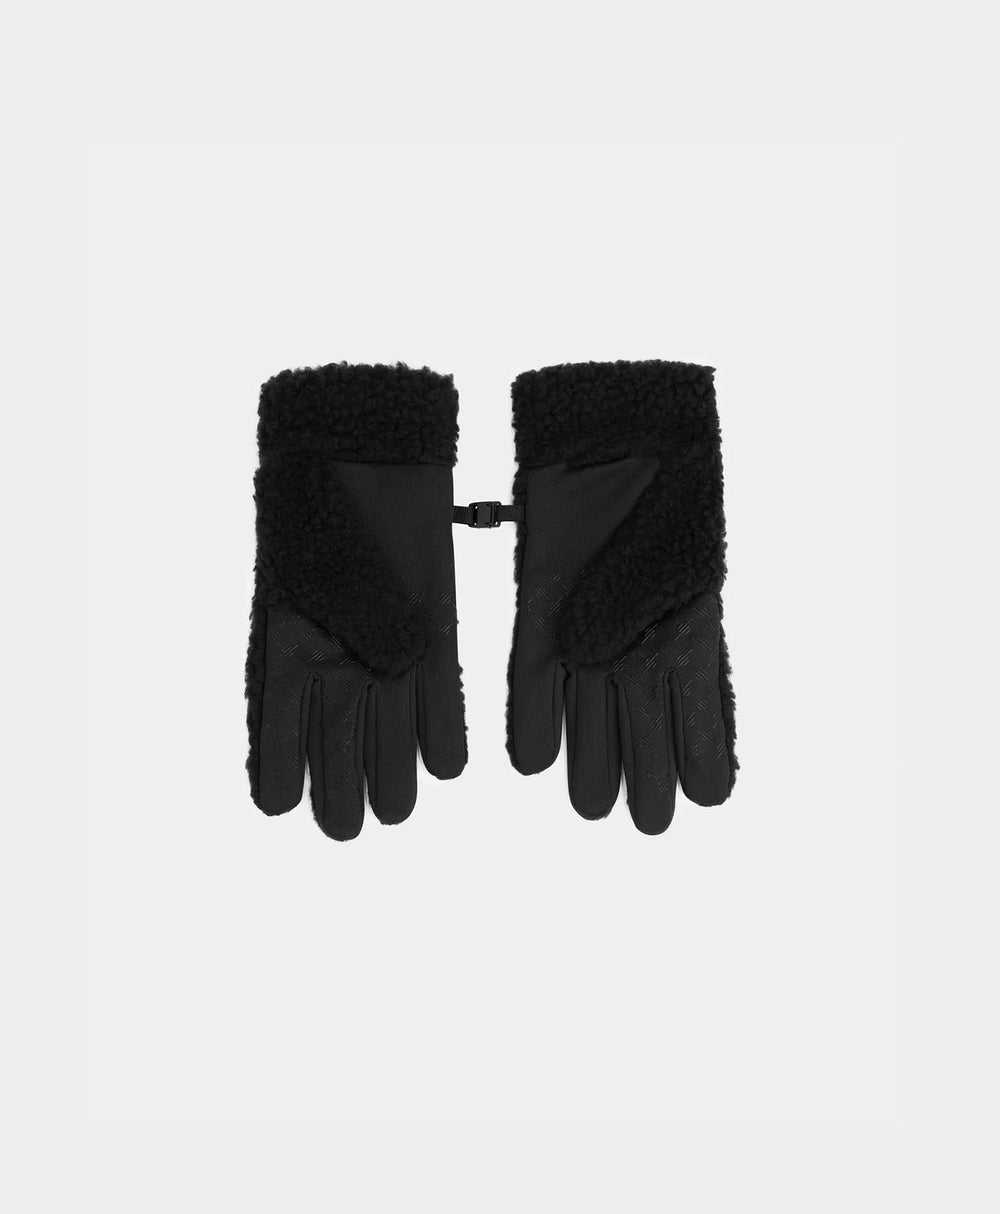 DP - Black Nokem Gloves - Packshot - Rear